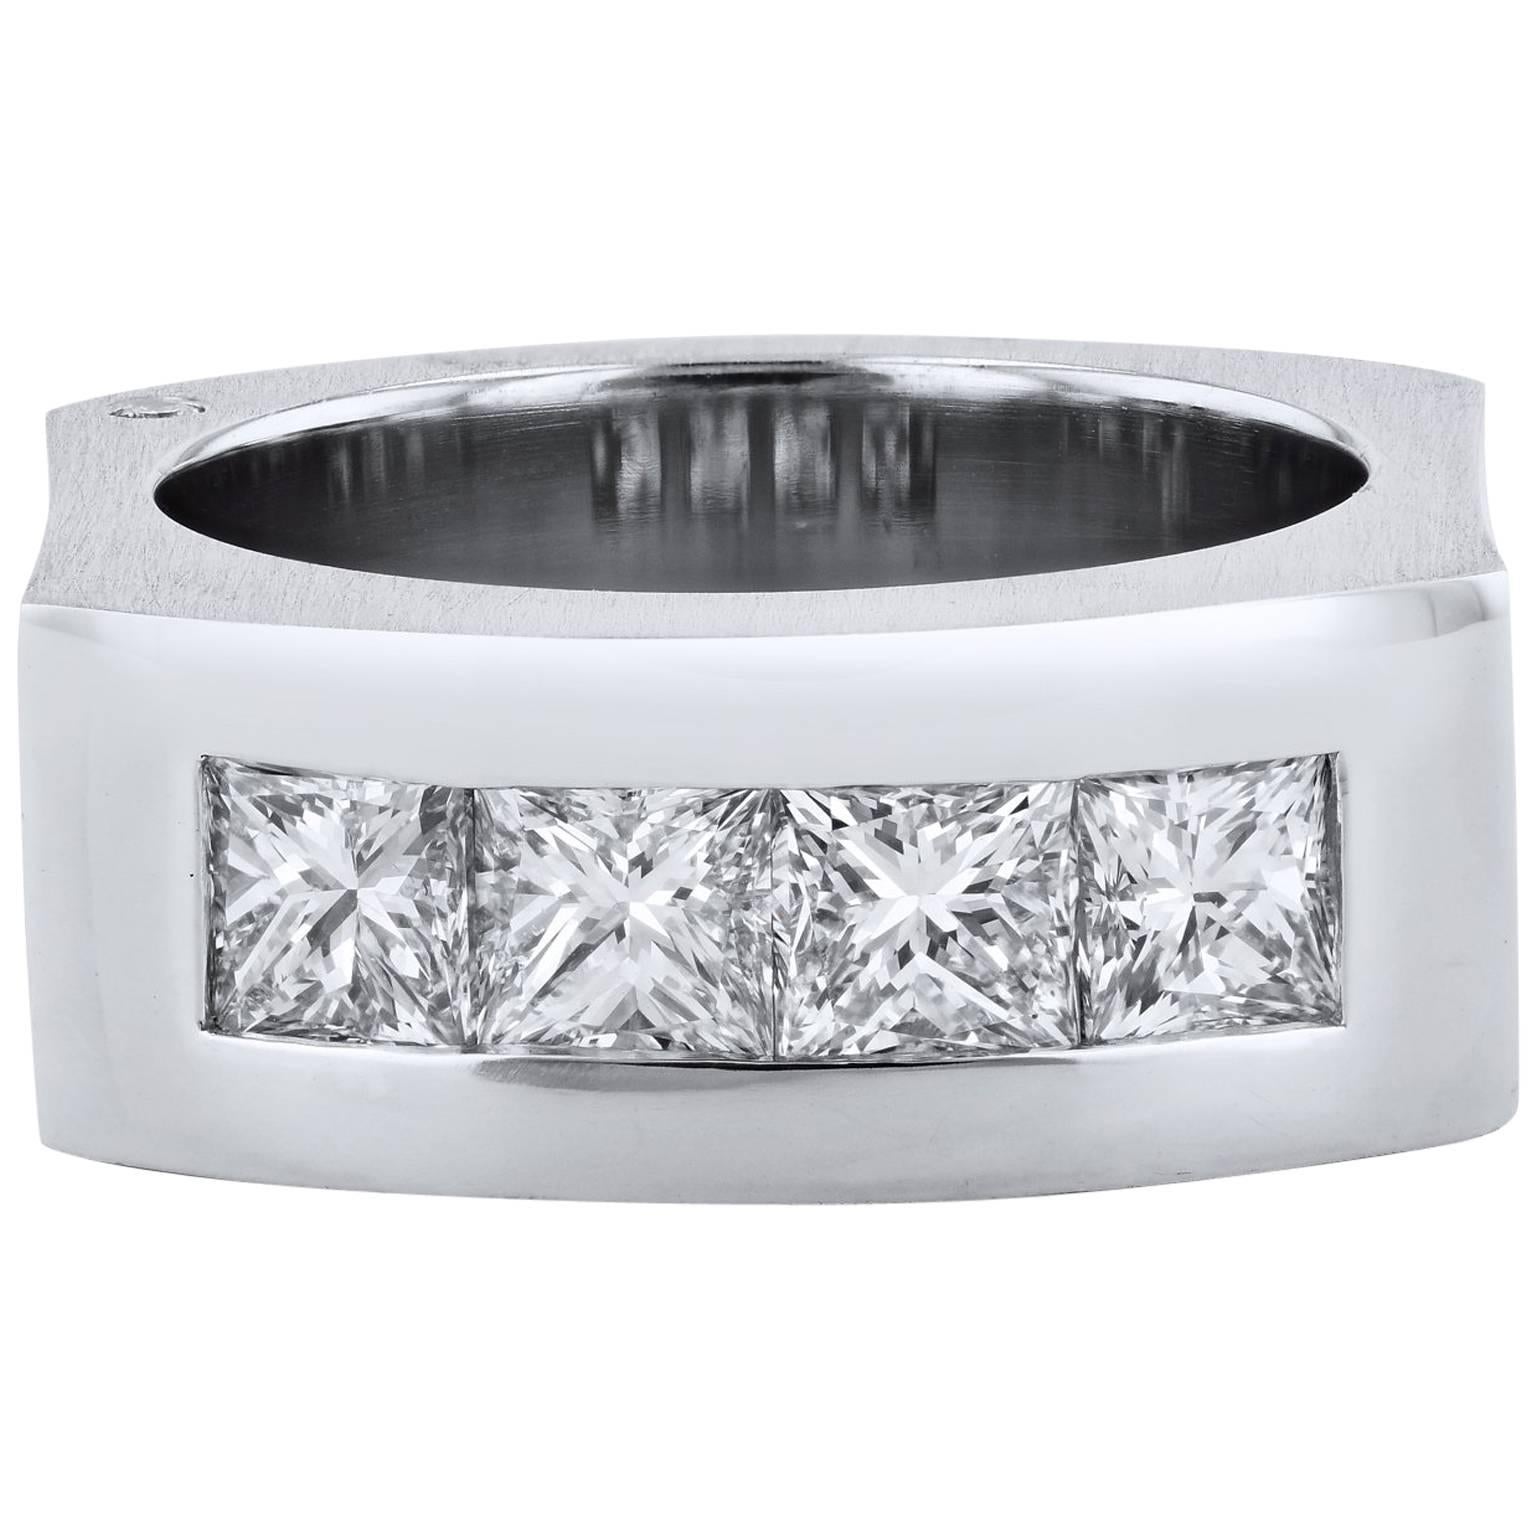 H & H 2.86 Carat Princess Cut Diamond Men’s Band Ring